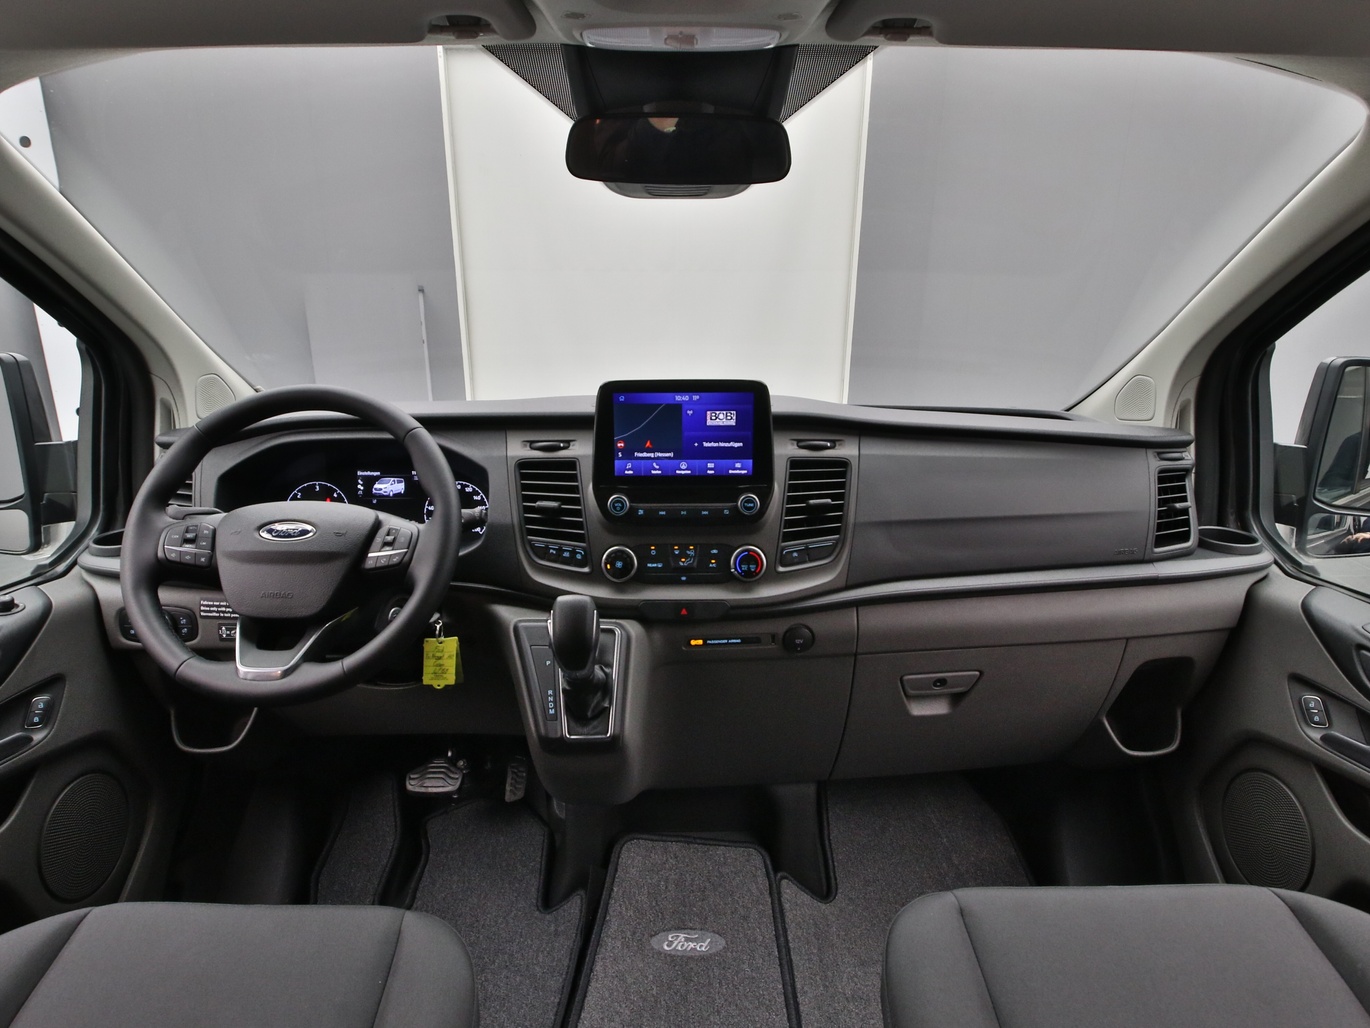  Ford Transit Nugget Aufstelldach 130PS Aut. in Magnetic Grau 